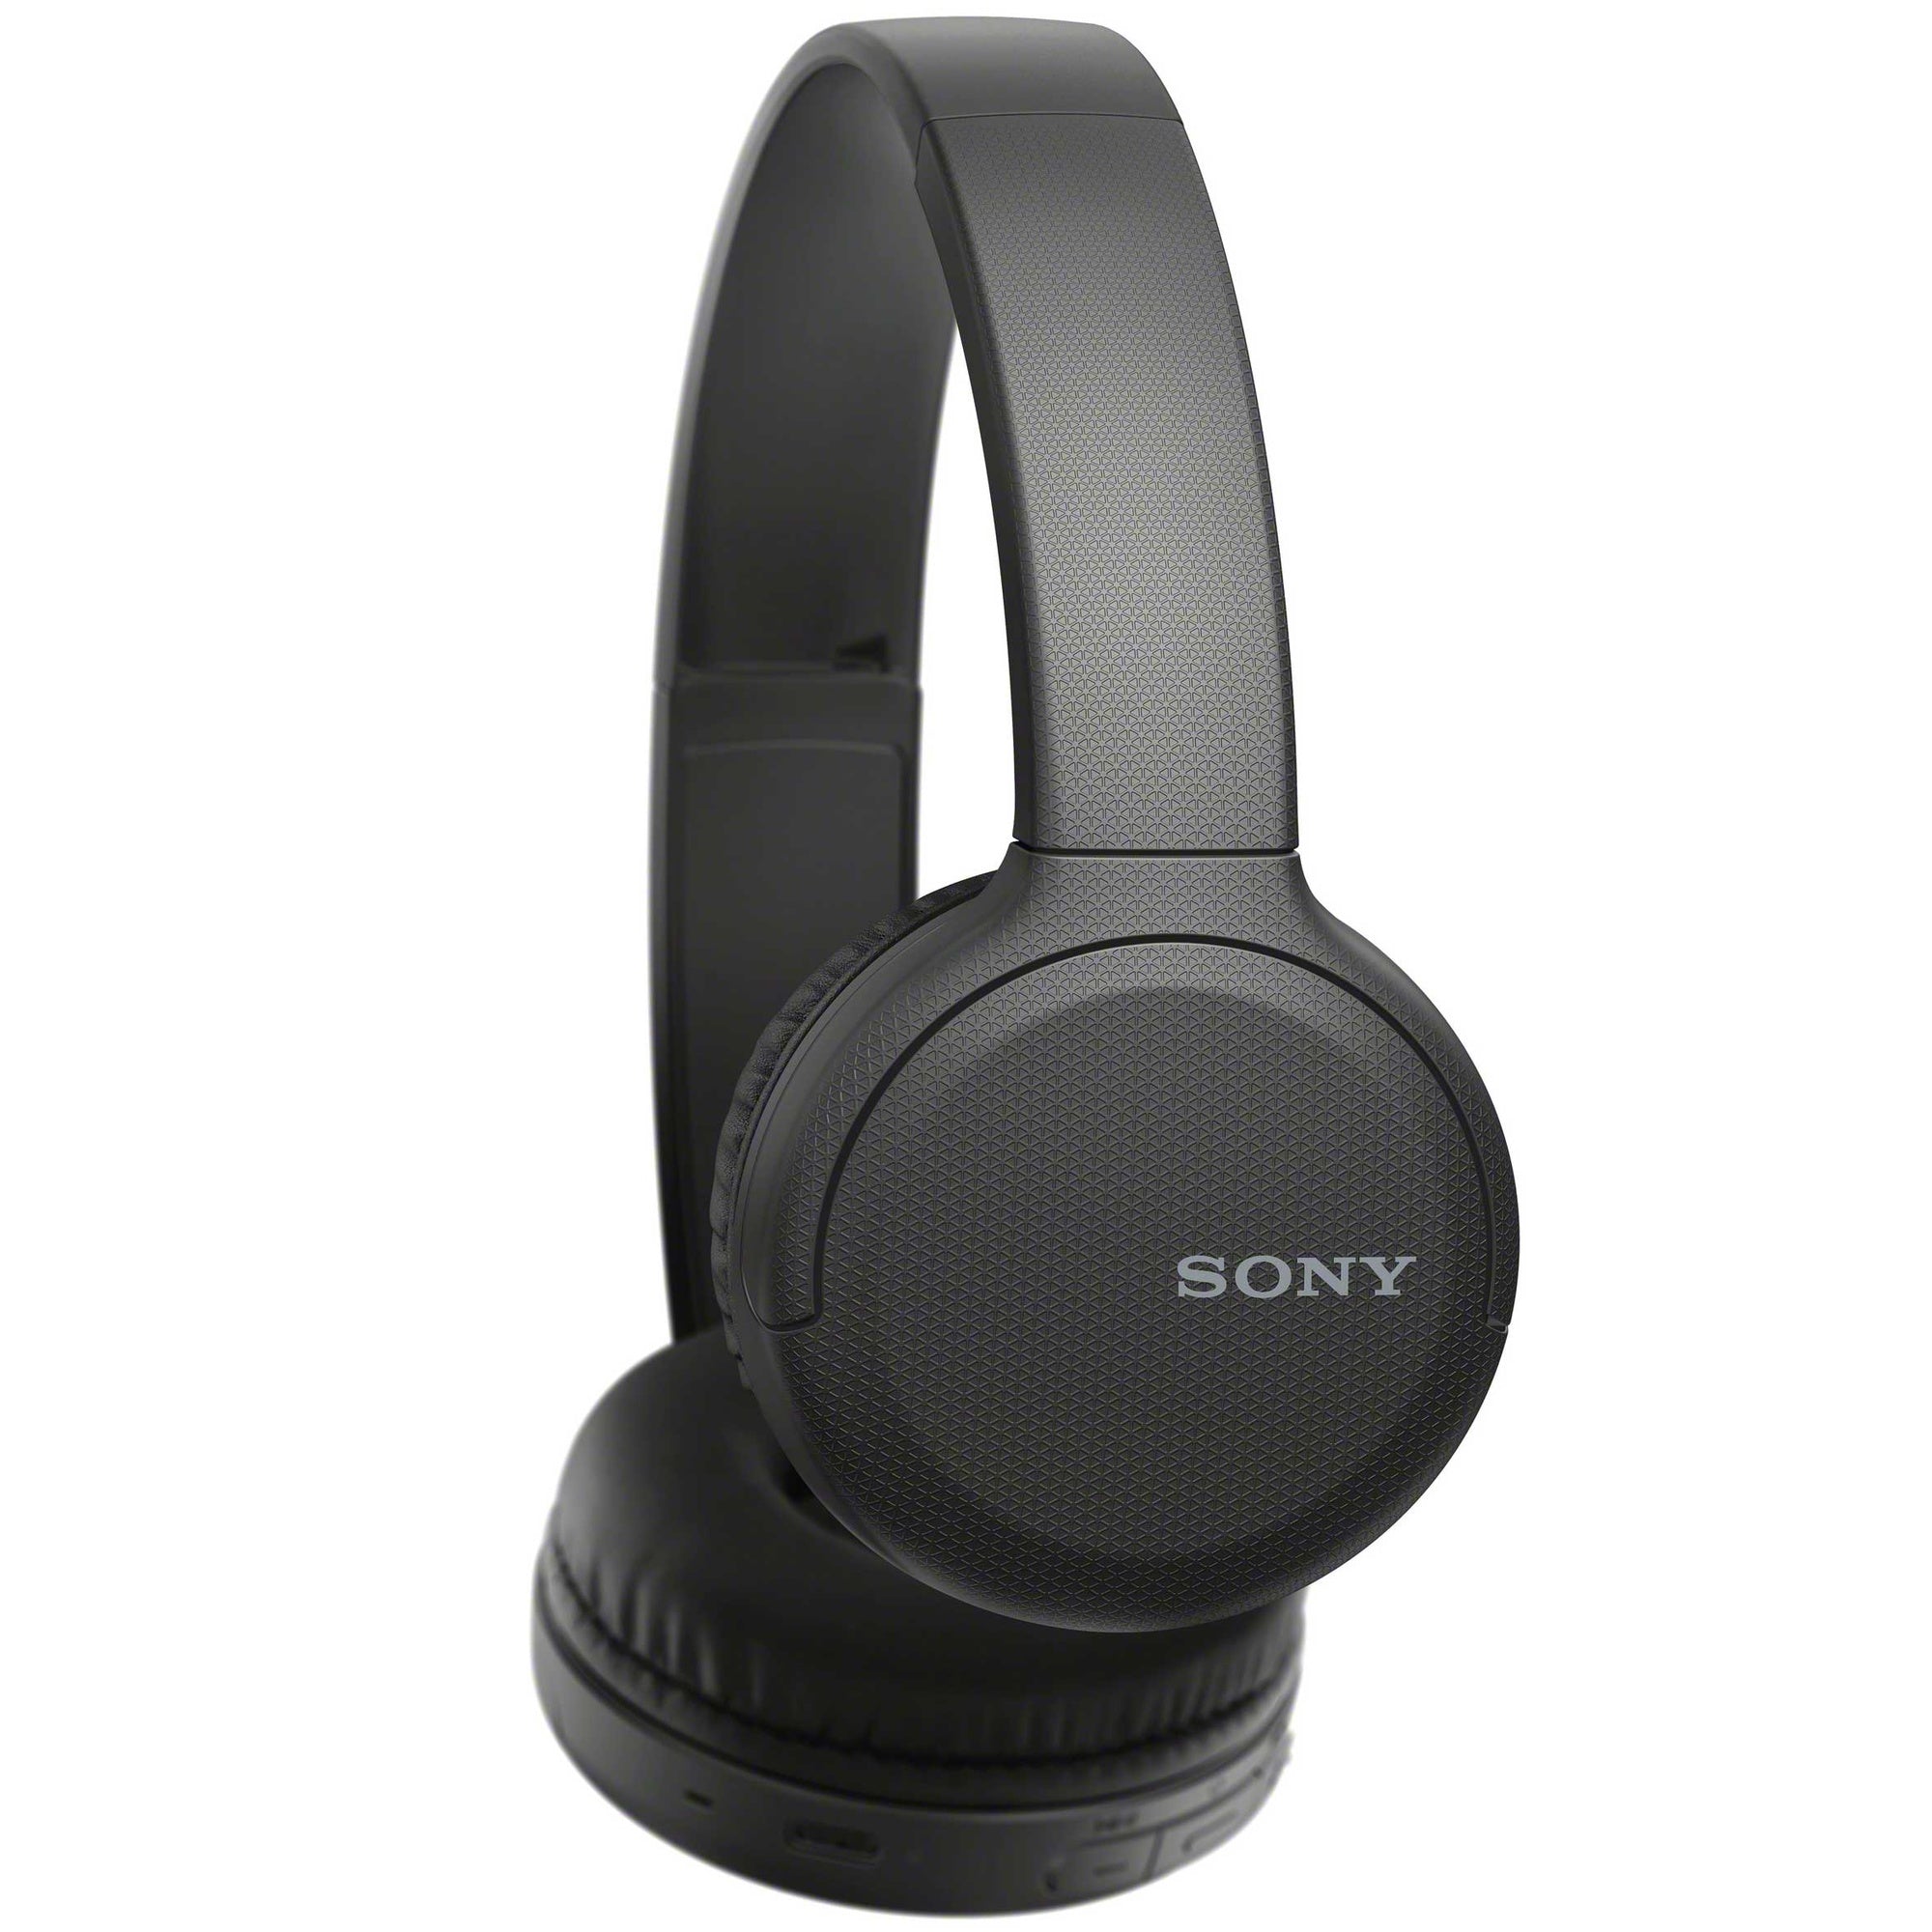 SONY CH510 Trådlösa Bluetooth hörlurar Svarta